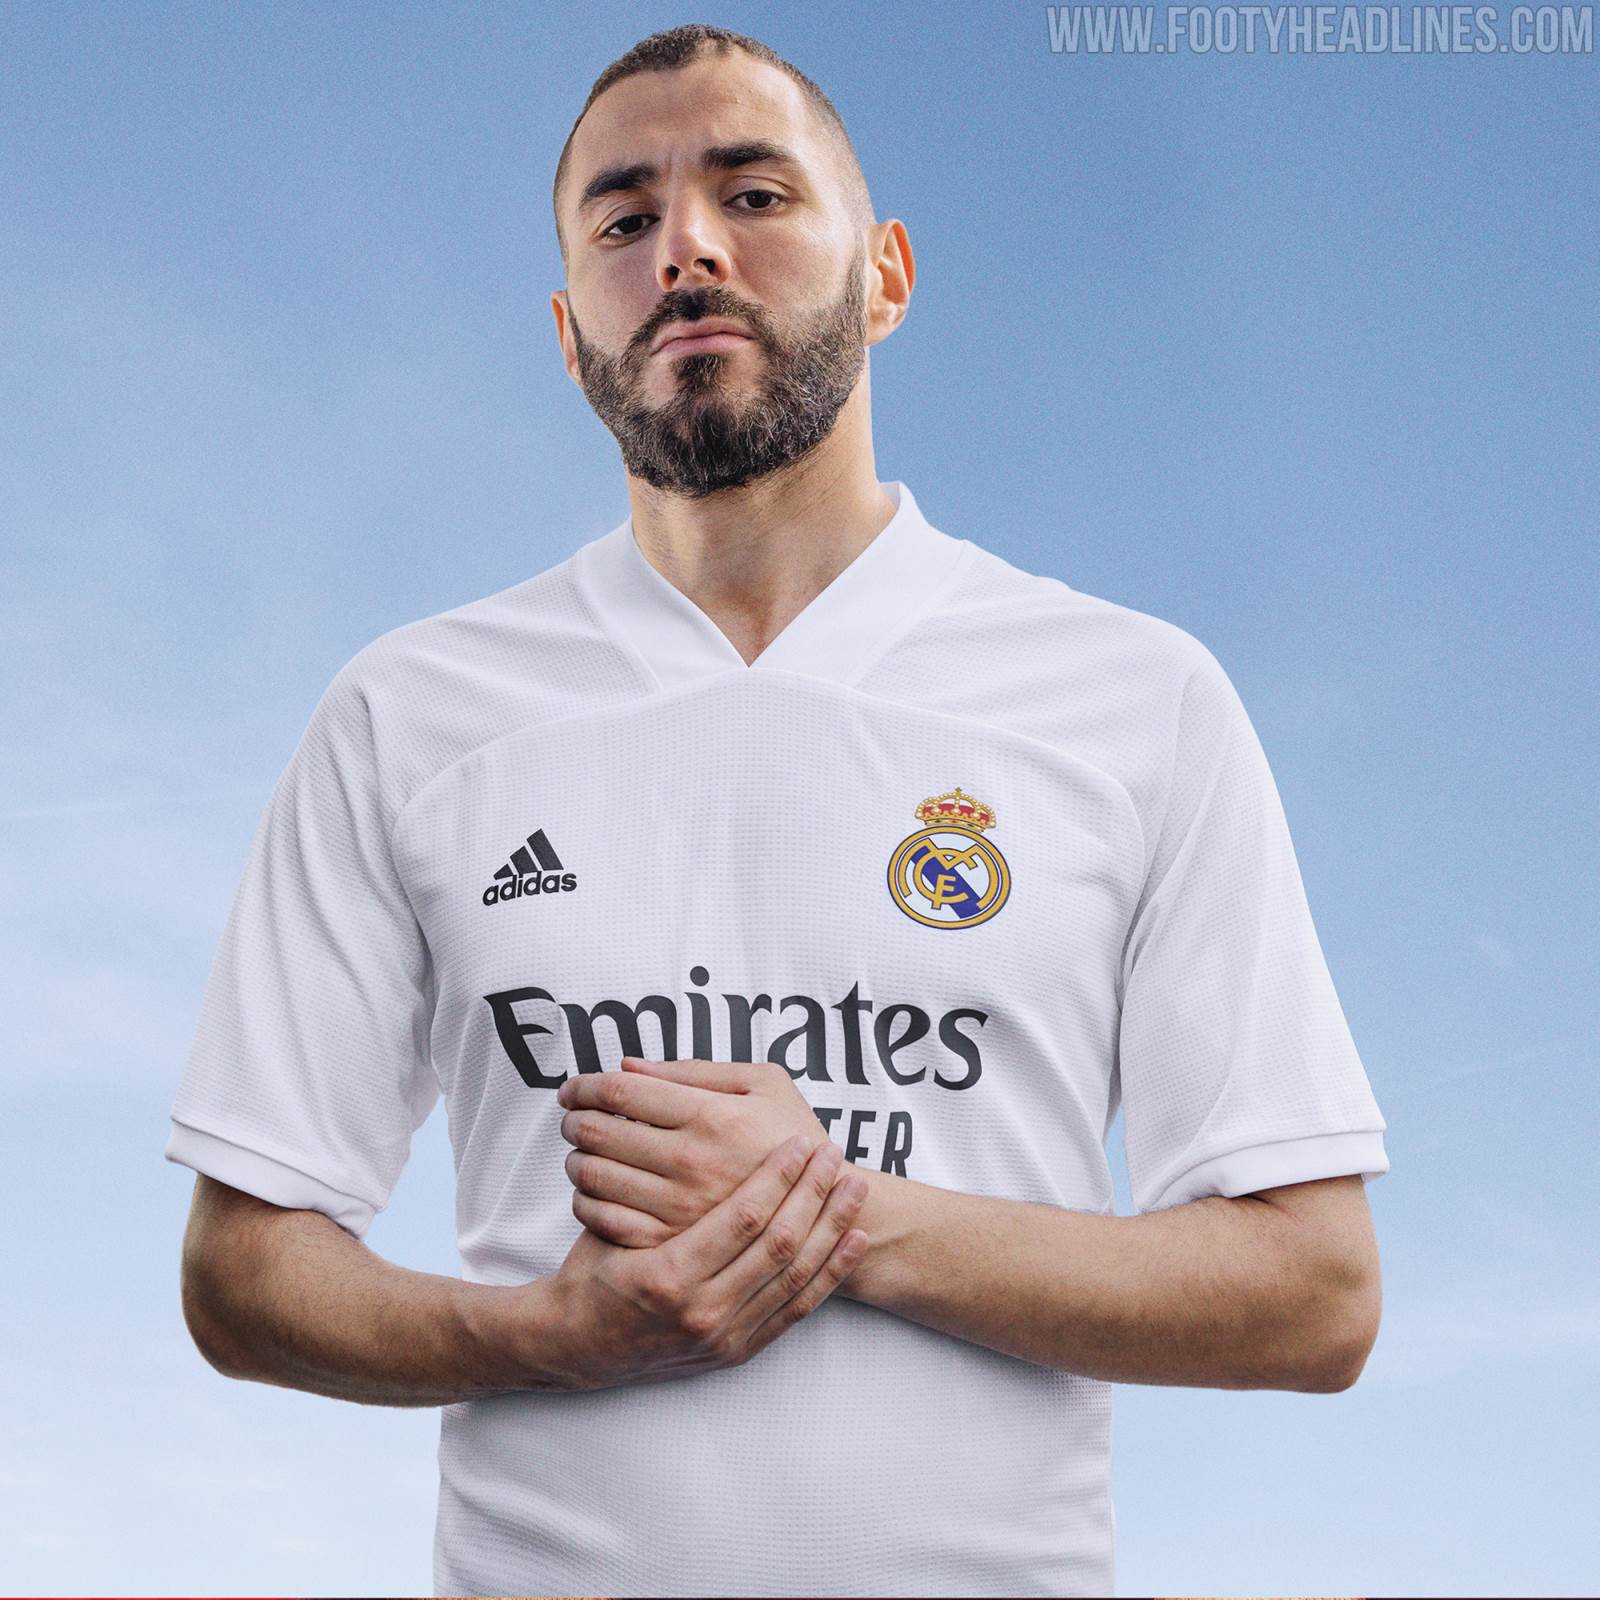 Preventie Inwoner massa Real Madrid 20-21 Home & Away Kits Released - Footy Headlines